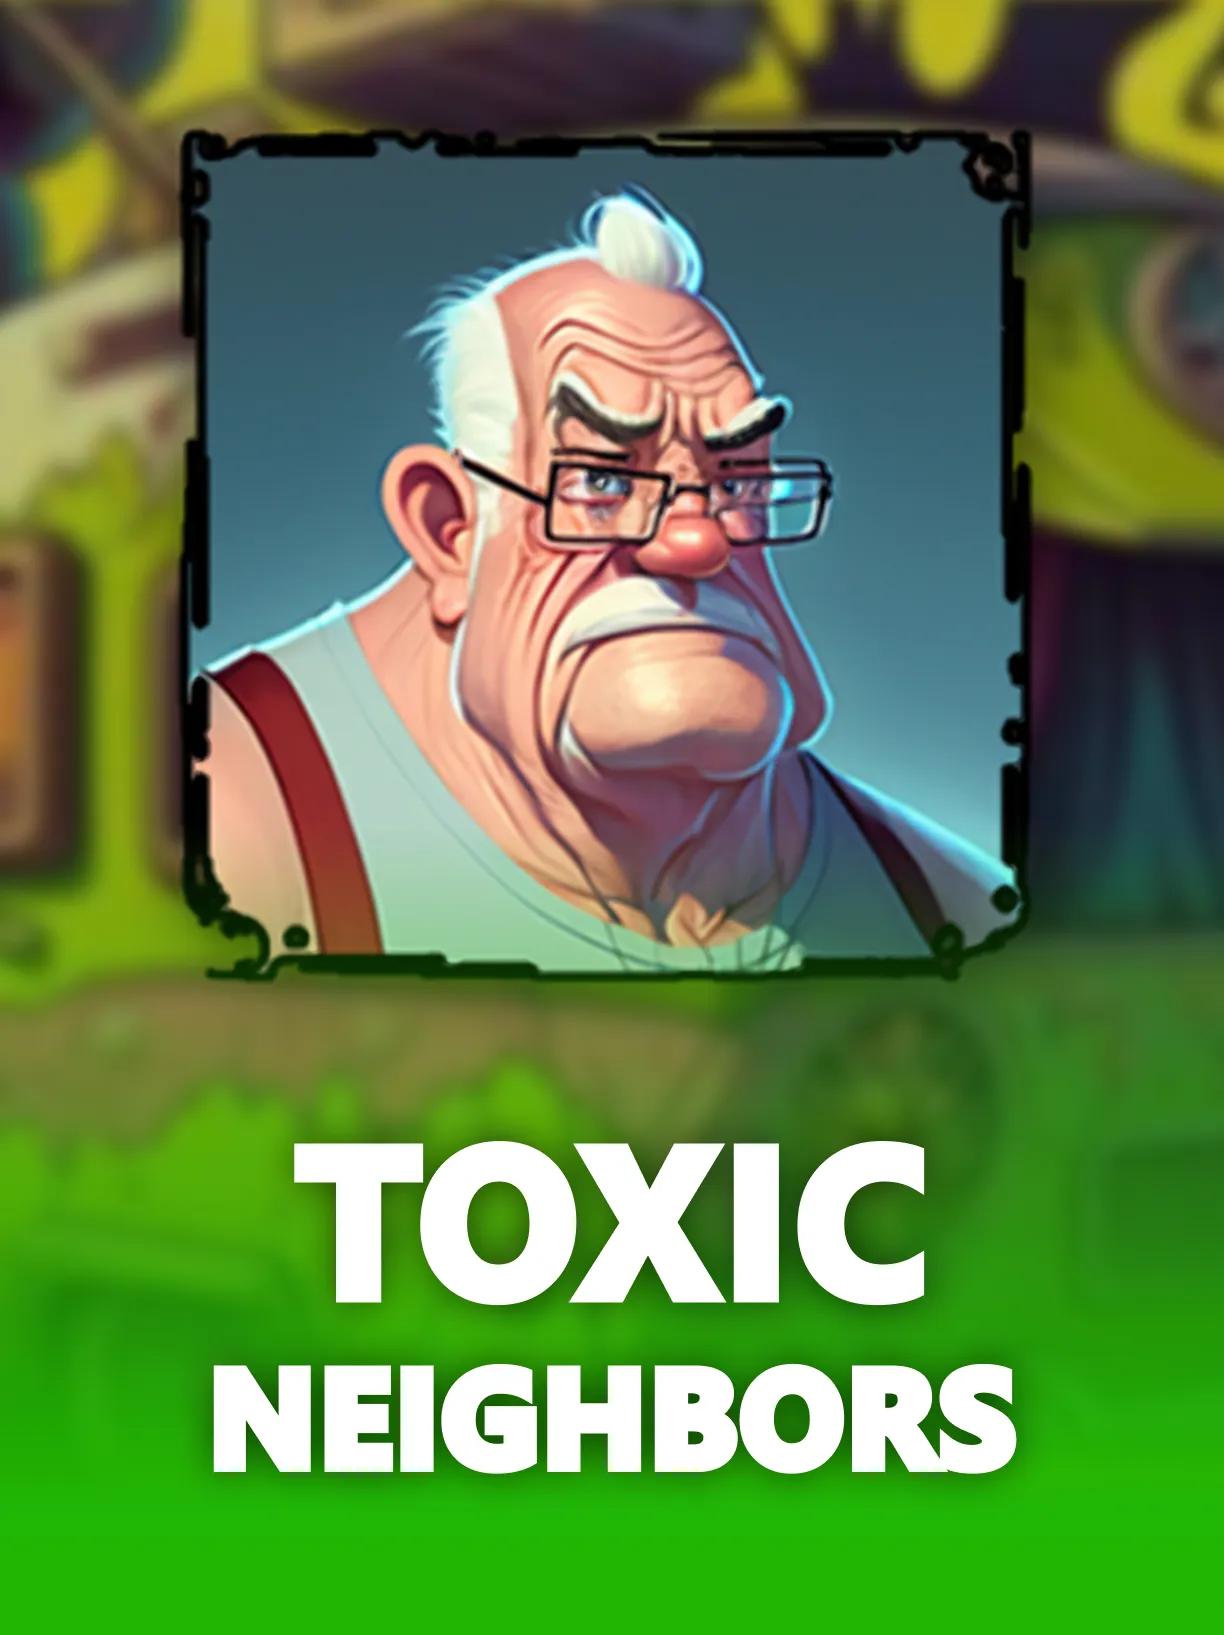 ug_Toxic_Neighbors_square.webp